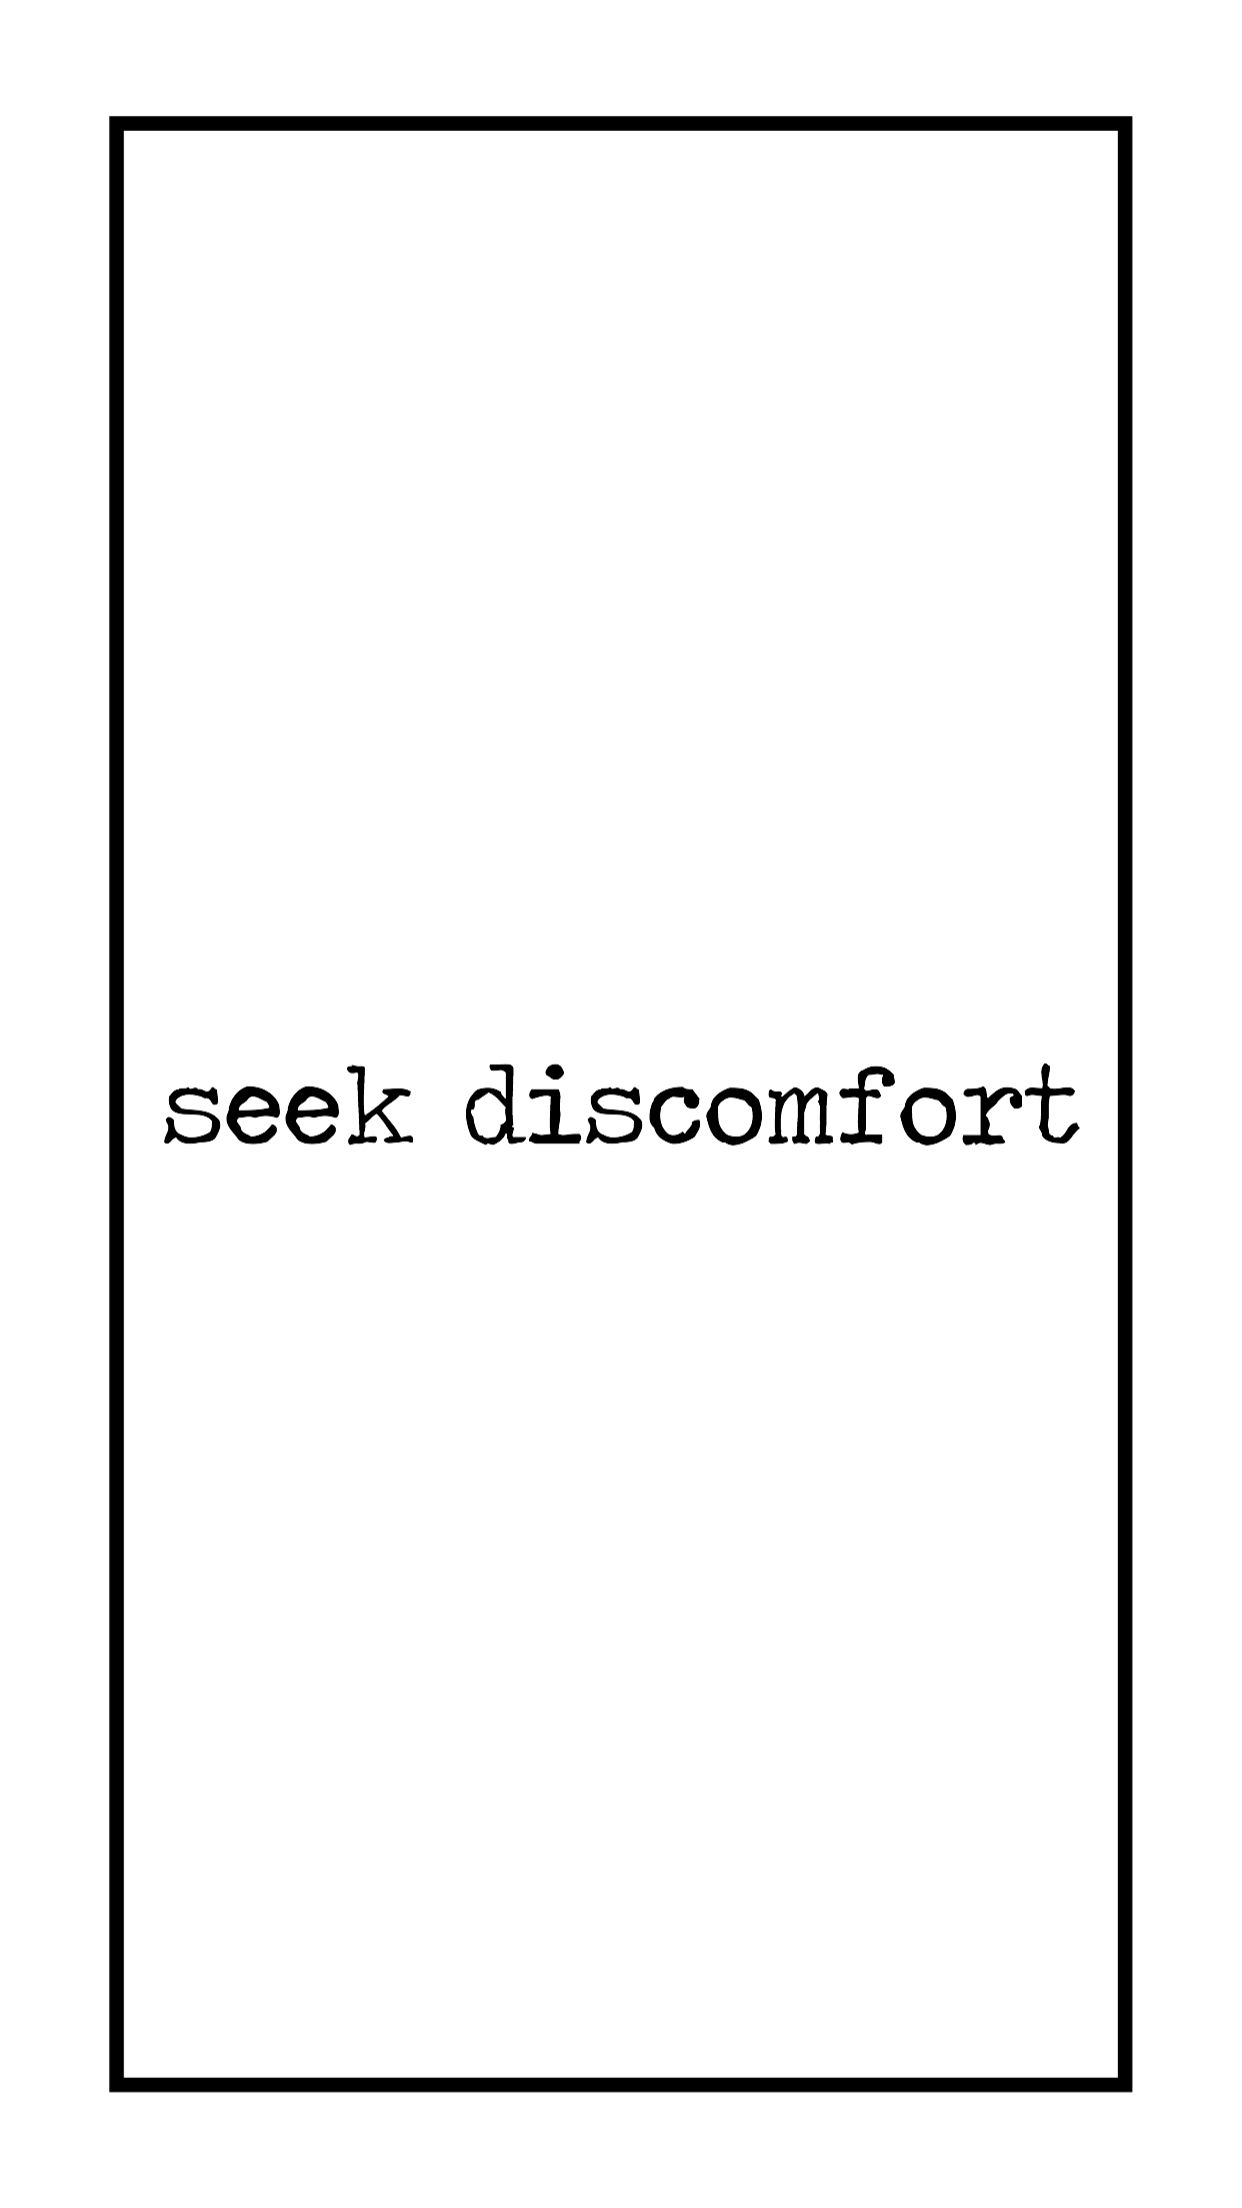 Seek Discomfort Wallpapers